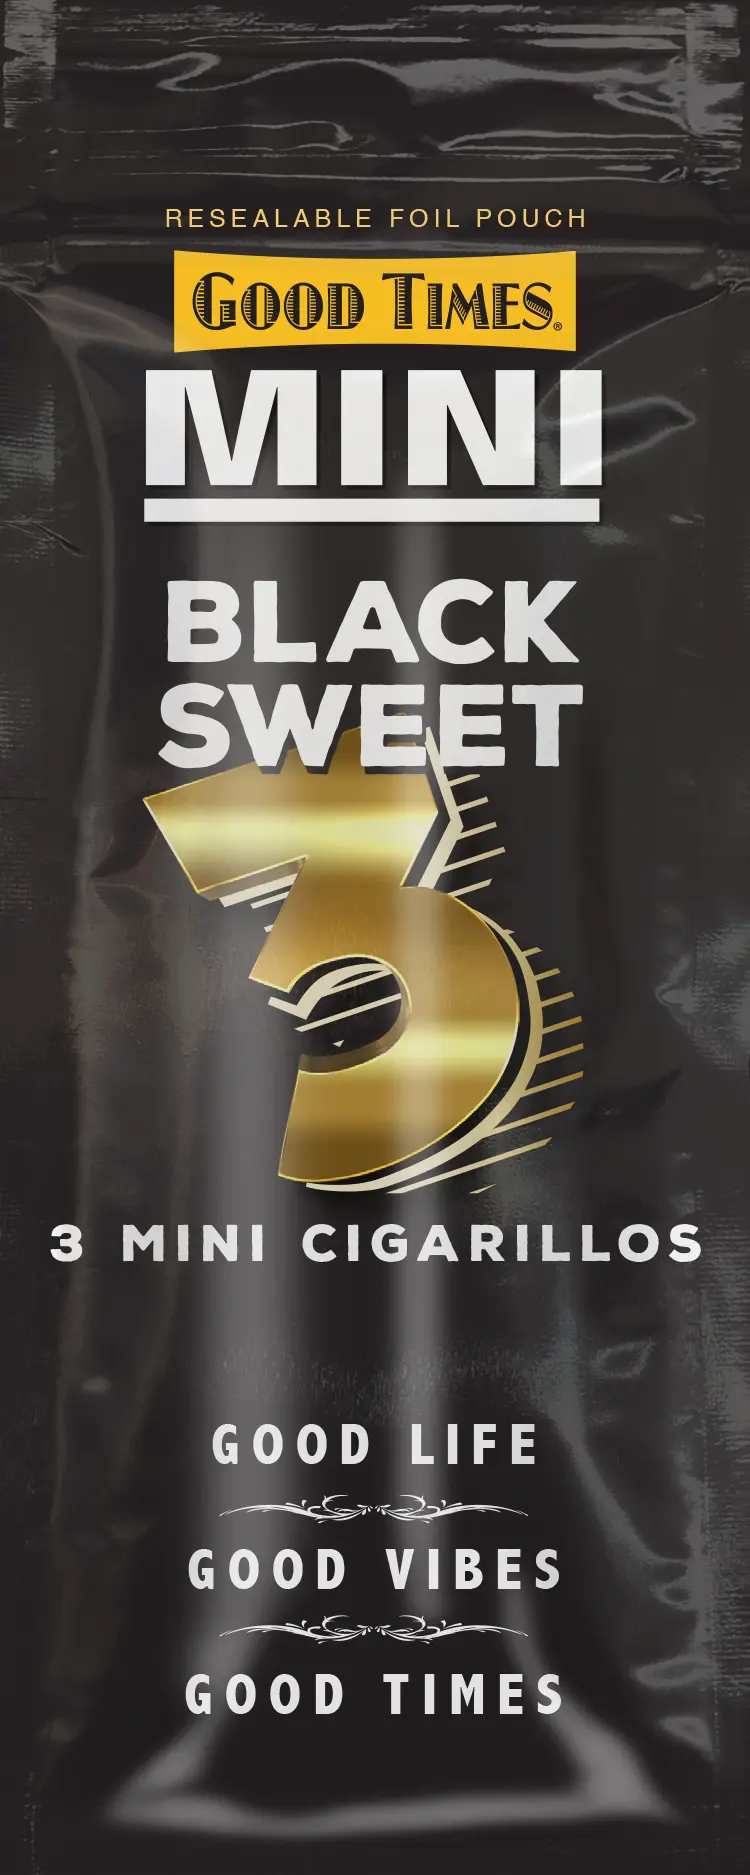 Good times black sweet mini 3/$1.19  f.p. 15/3pk